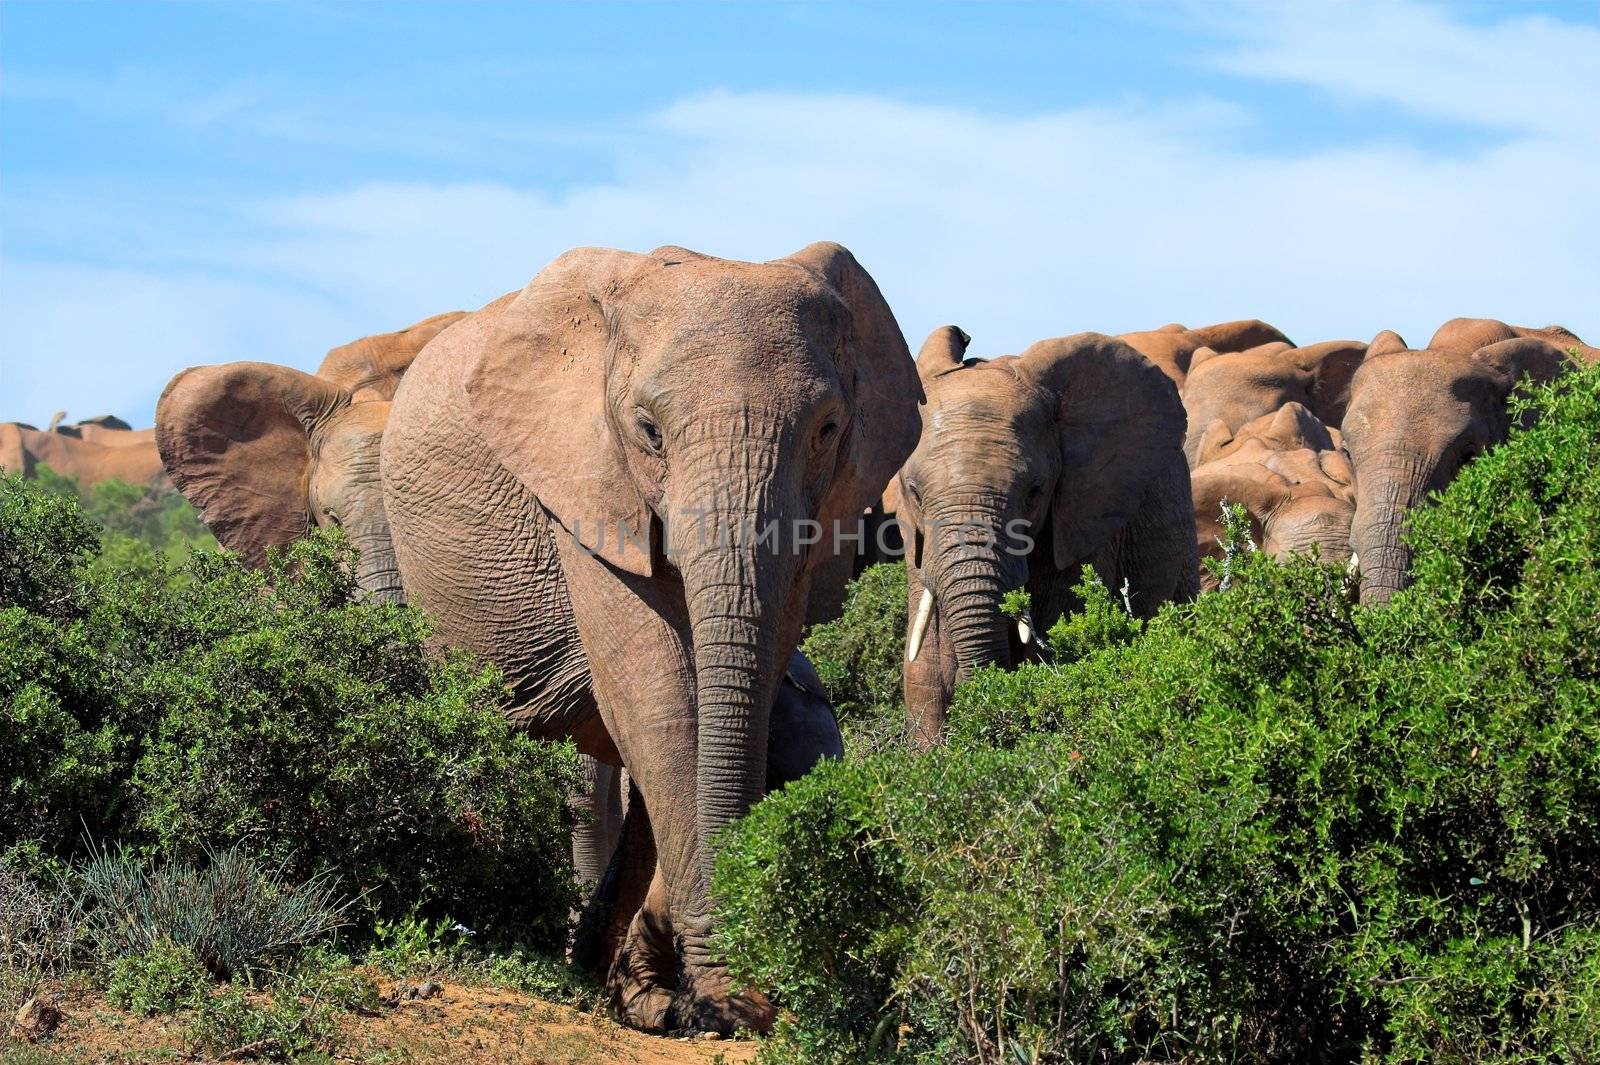 Elephants in the african bush by nightowlza